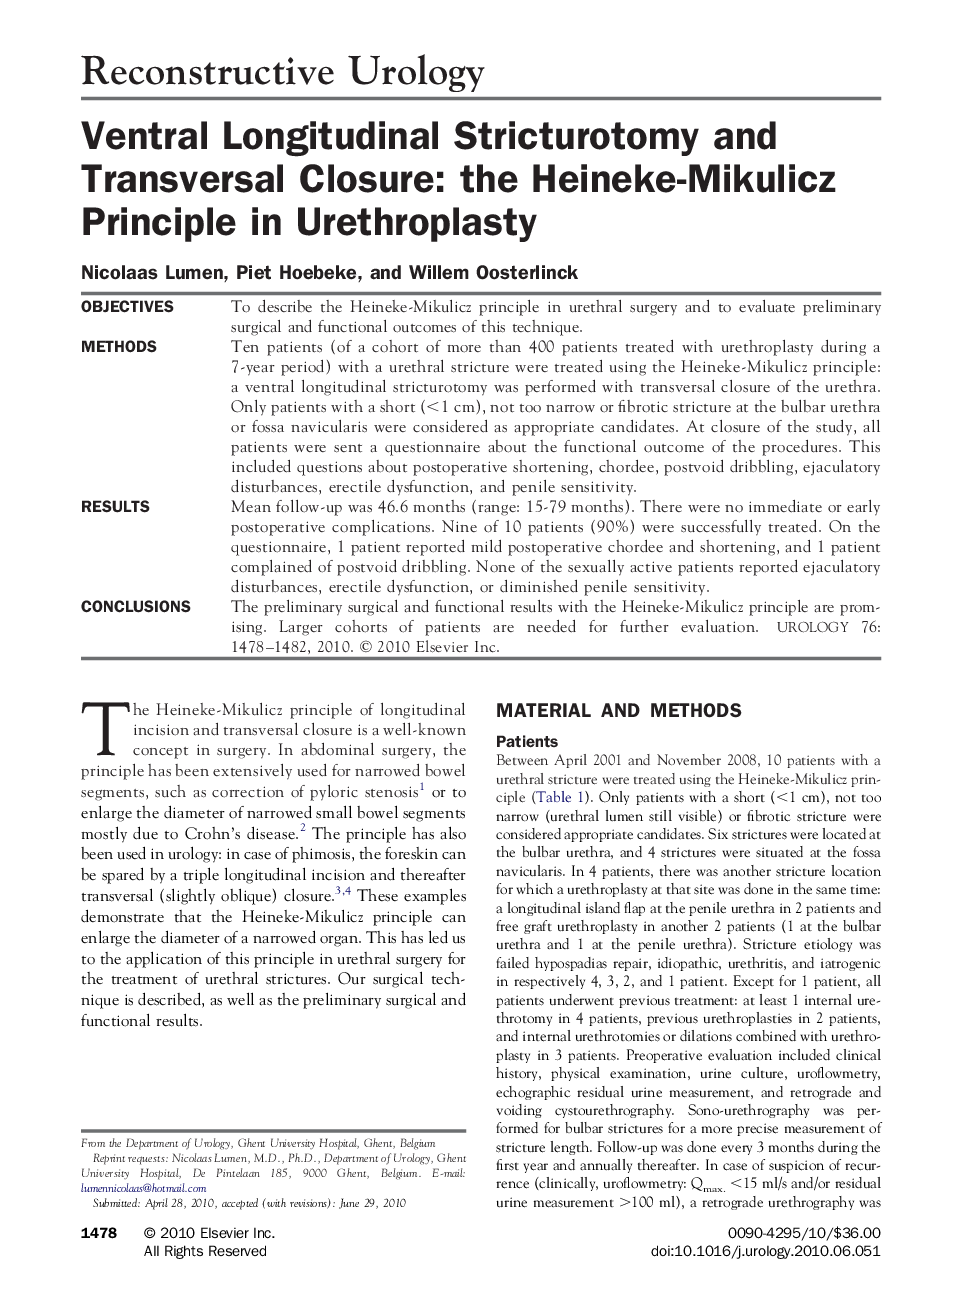 Ventral Longitudinal Stricturotomy and Transversal Closure: the Heineke-Mikulicz Principle in Urethroplasty